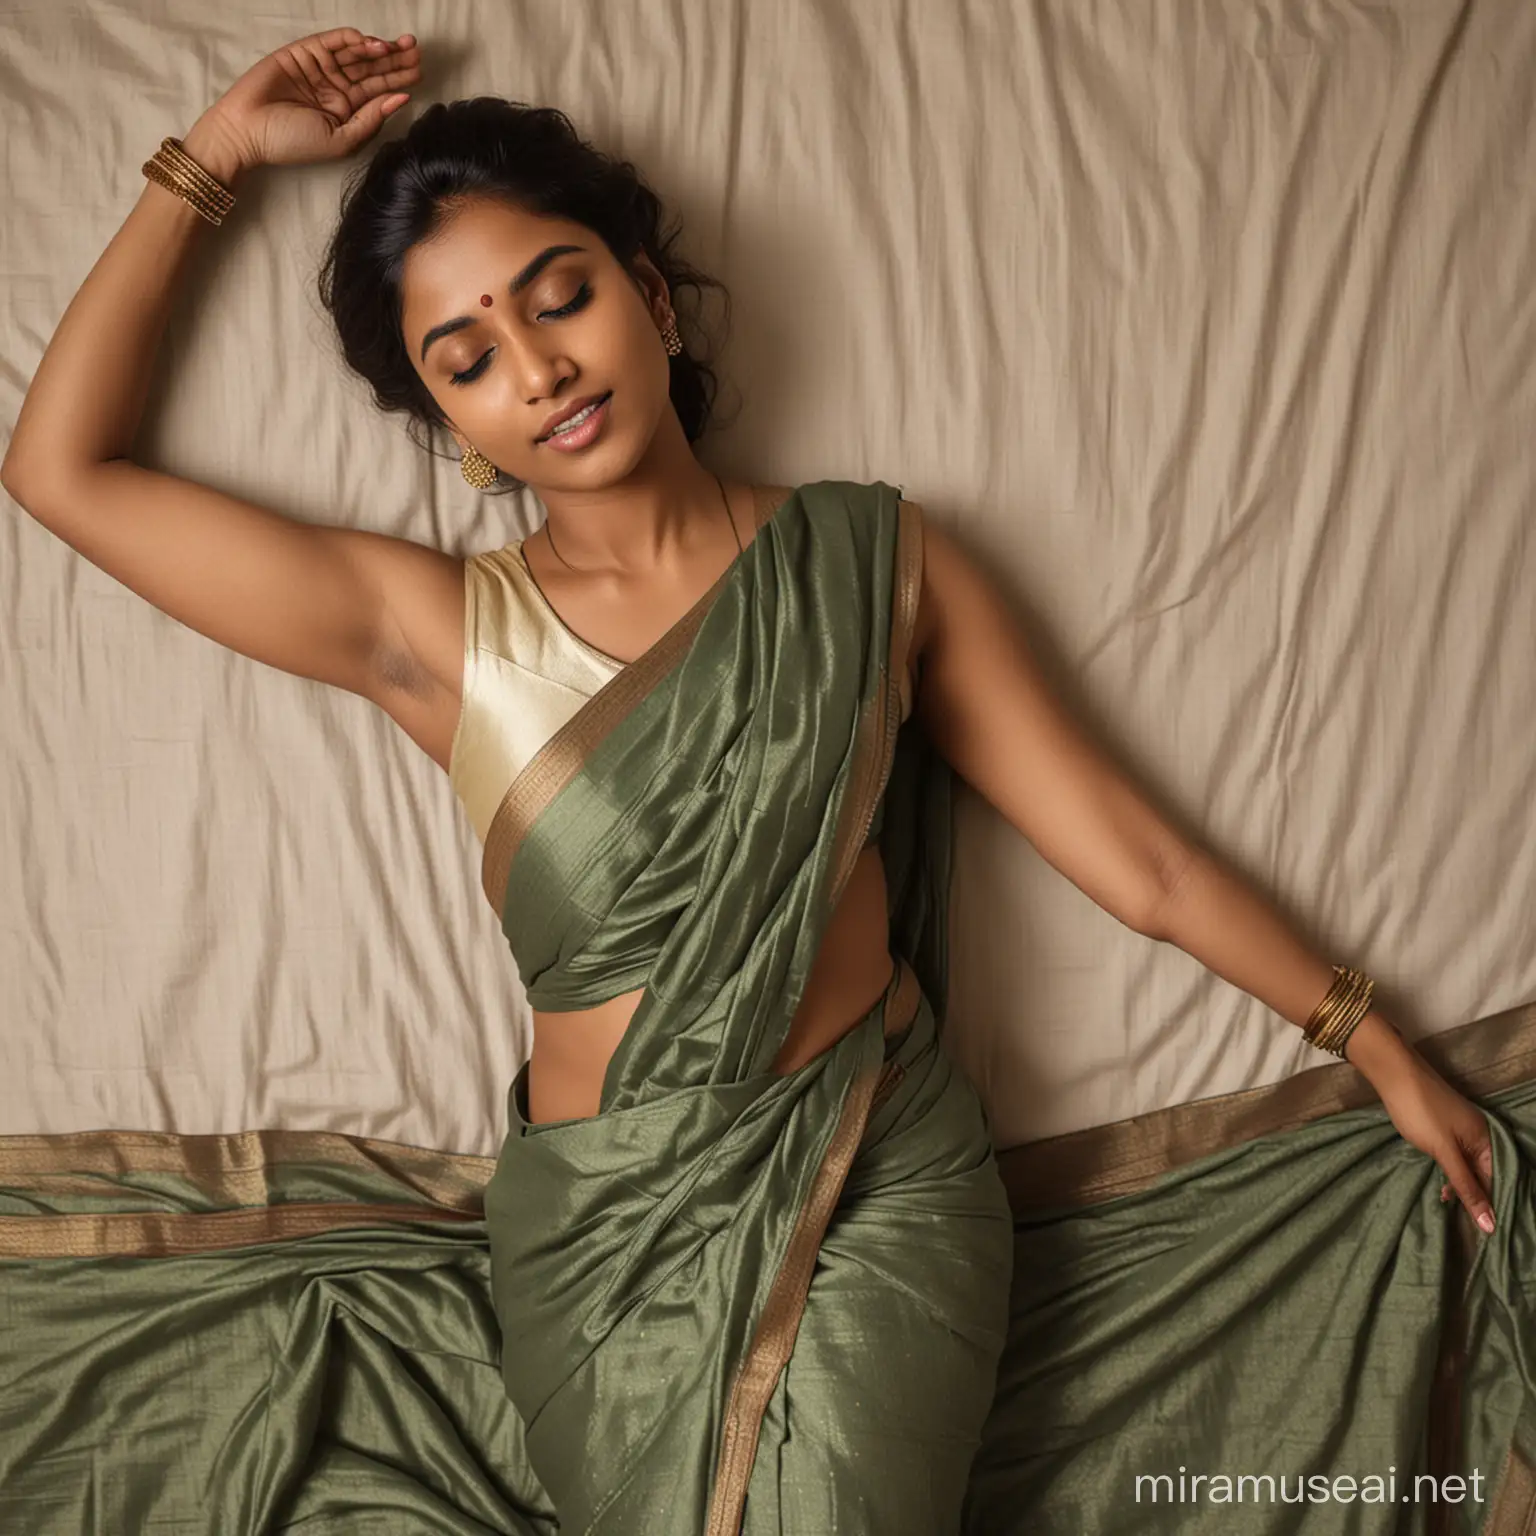 Indian women,darker skin,both arms up, sleeveless saree, sleeping on bed